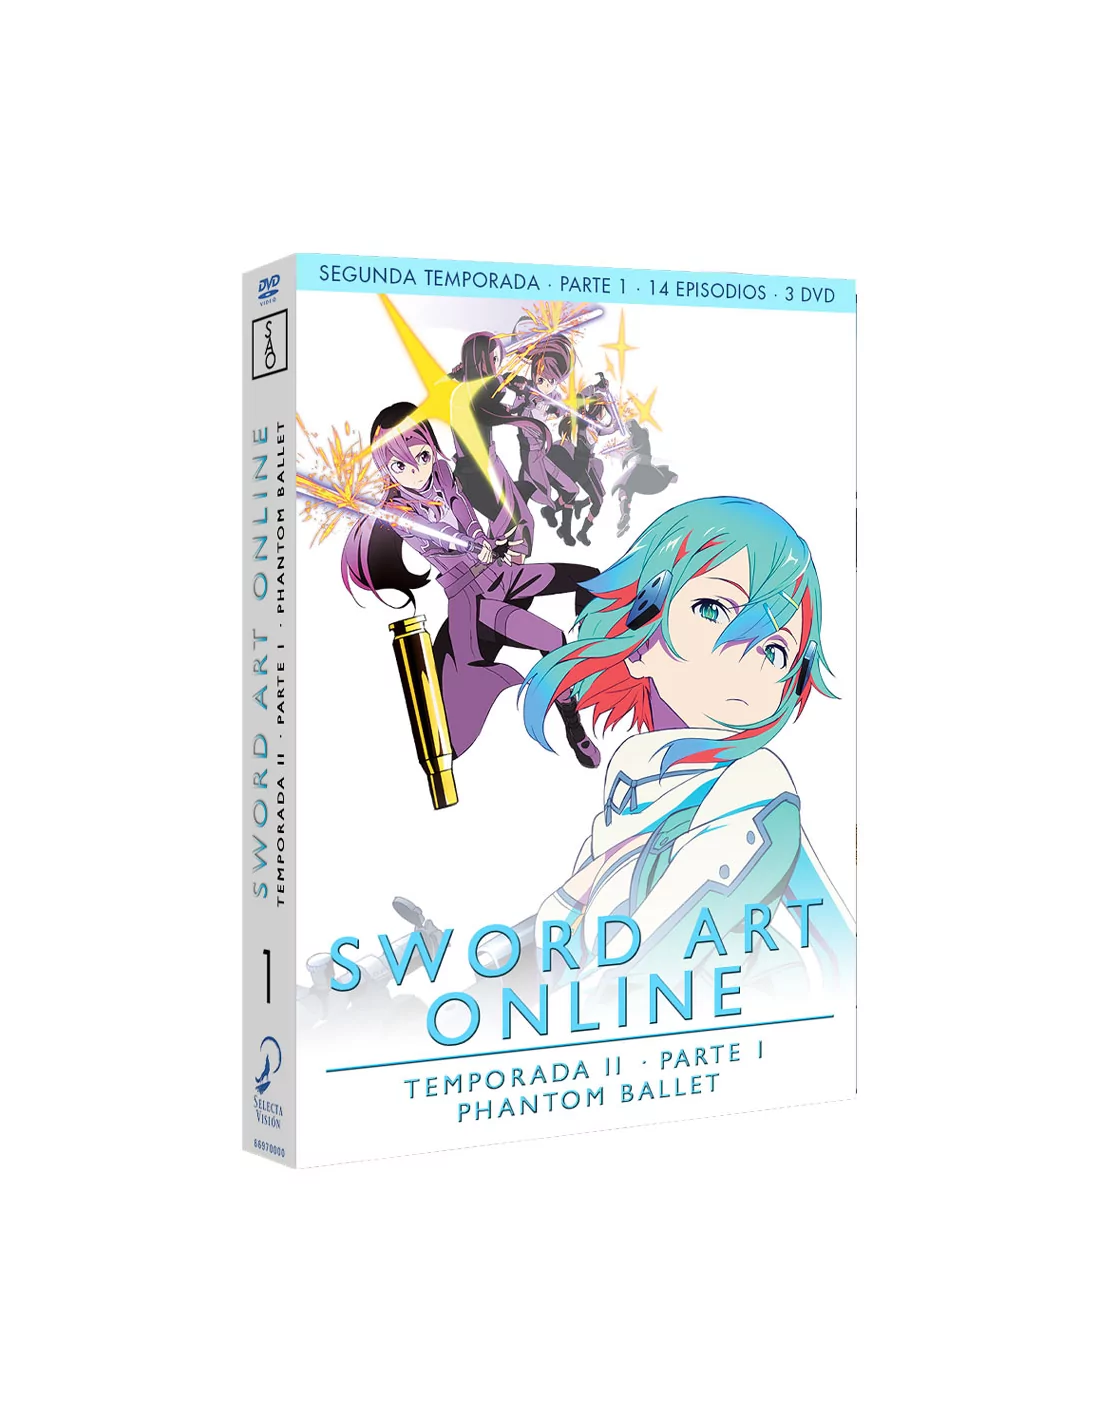 Sword Art Online - Temporada 1, Parte 2 (Episodios 15-25) [DVD]